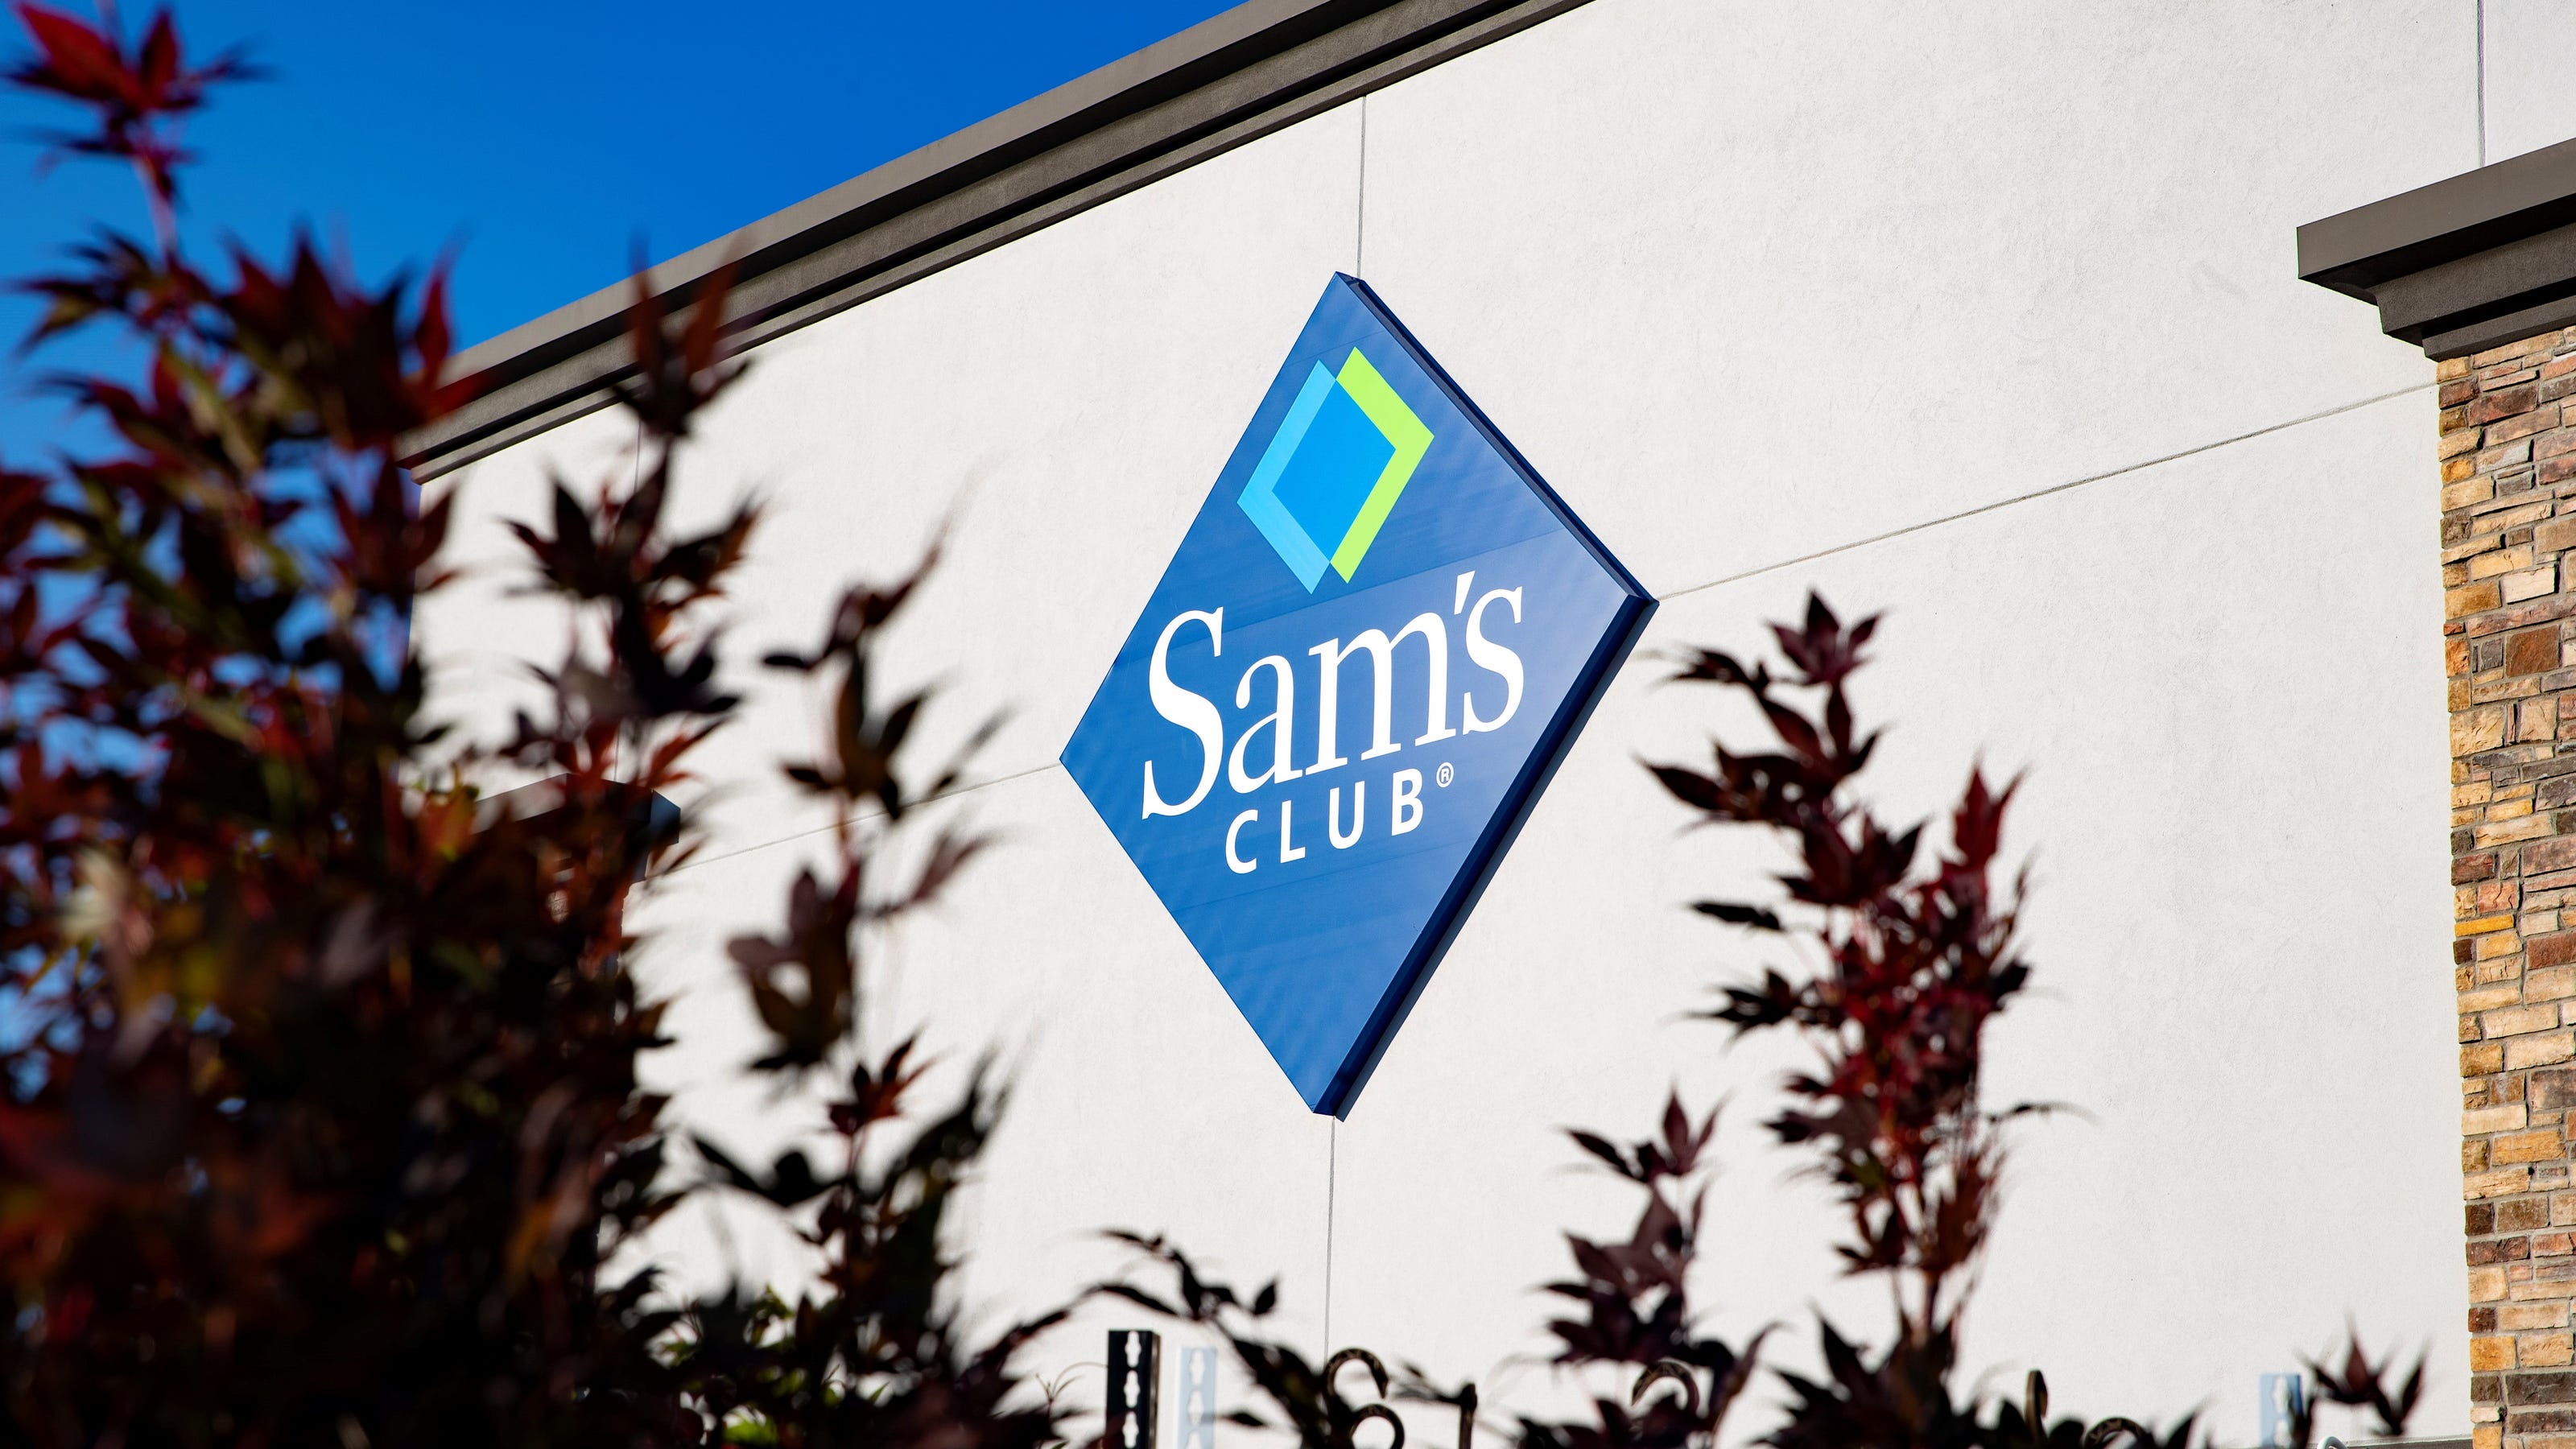 Sam's Club samples, Taste & Tips demo program returning to stores